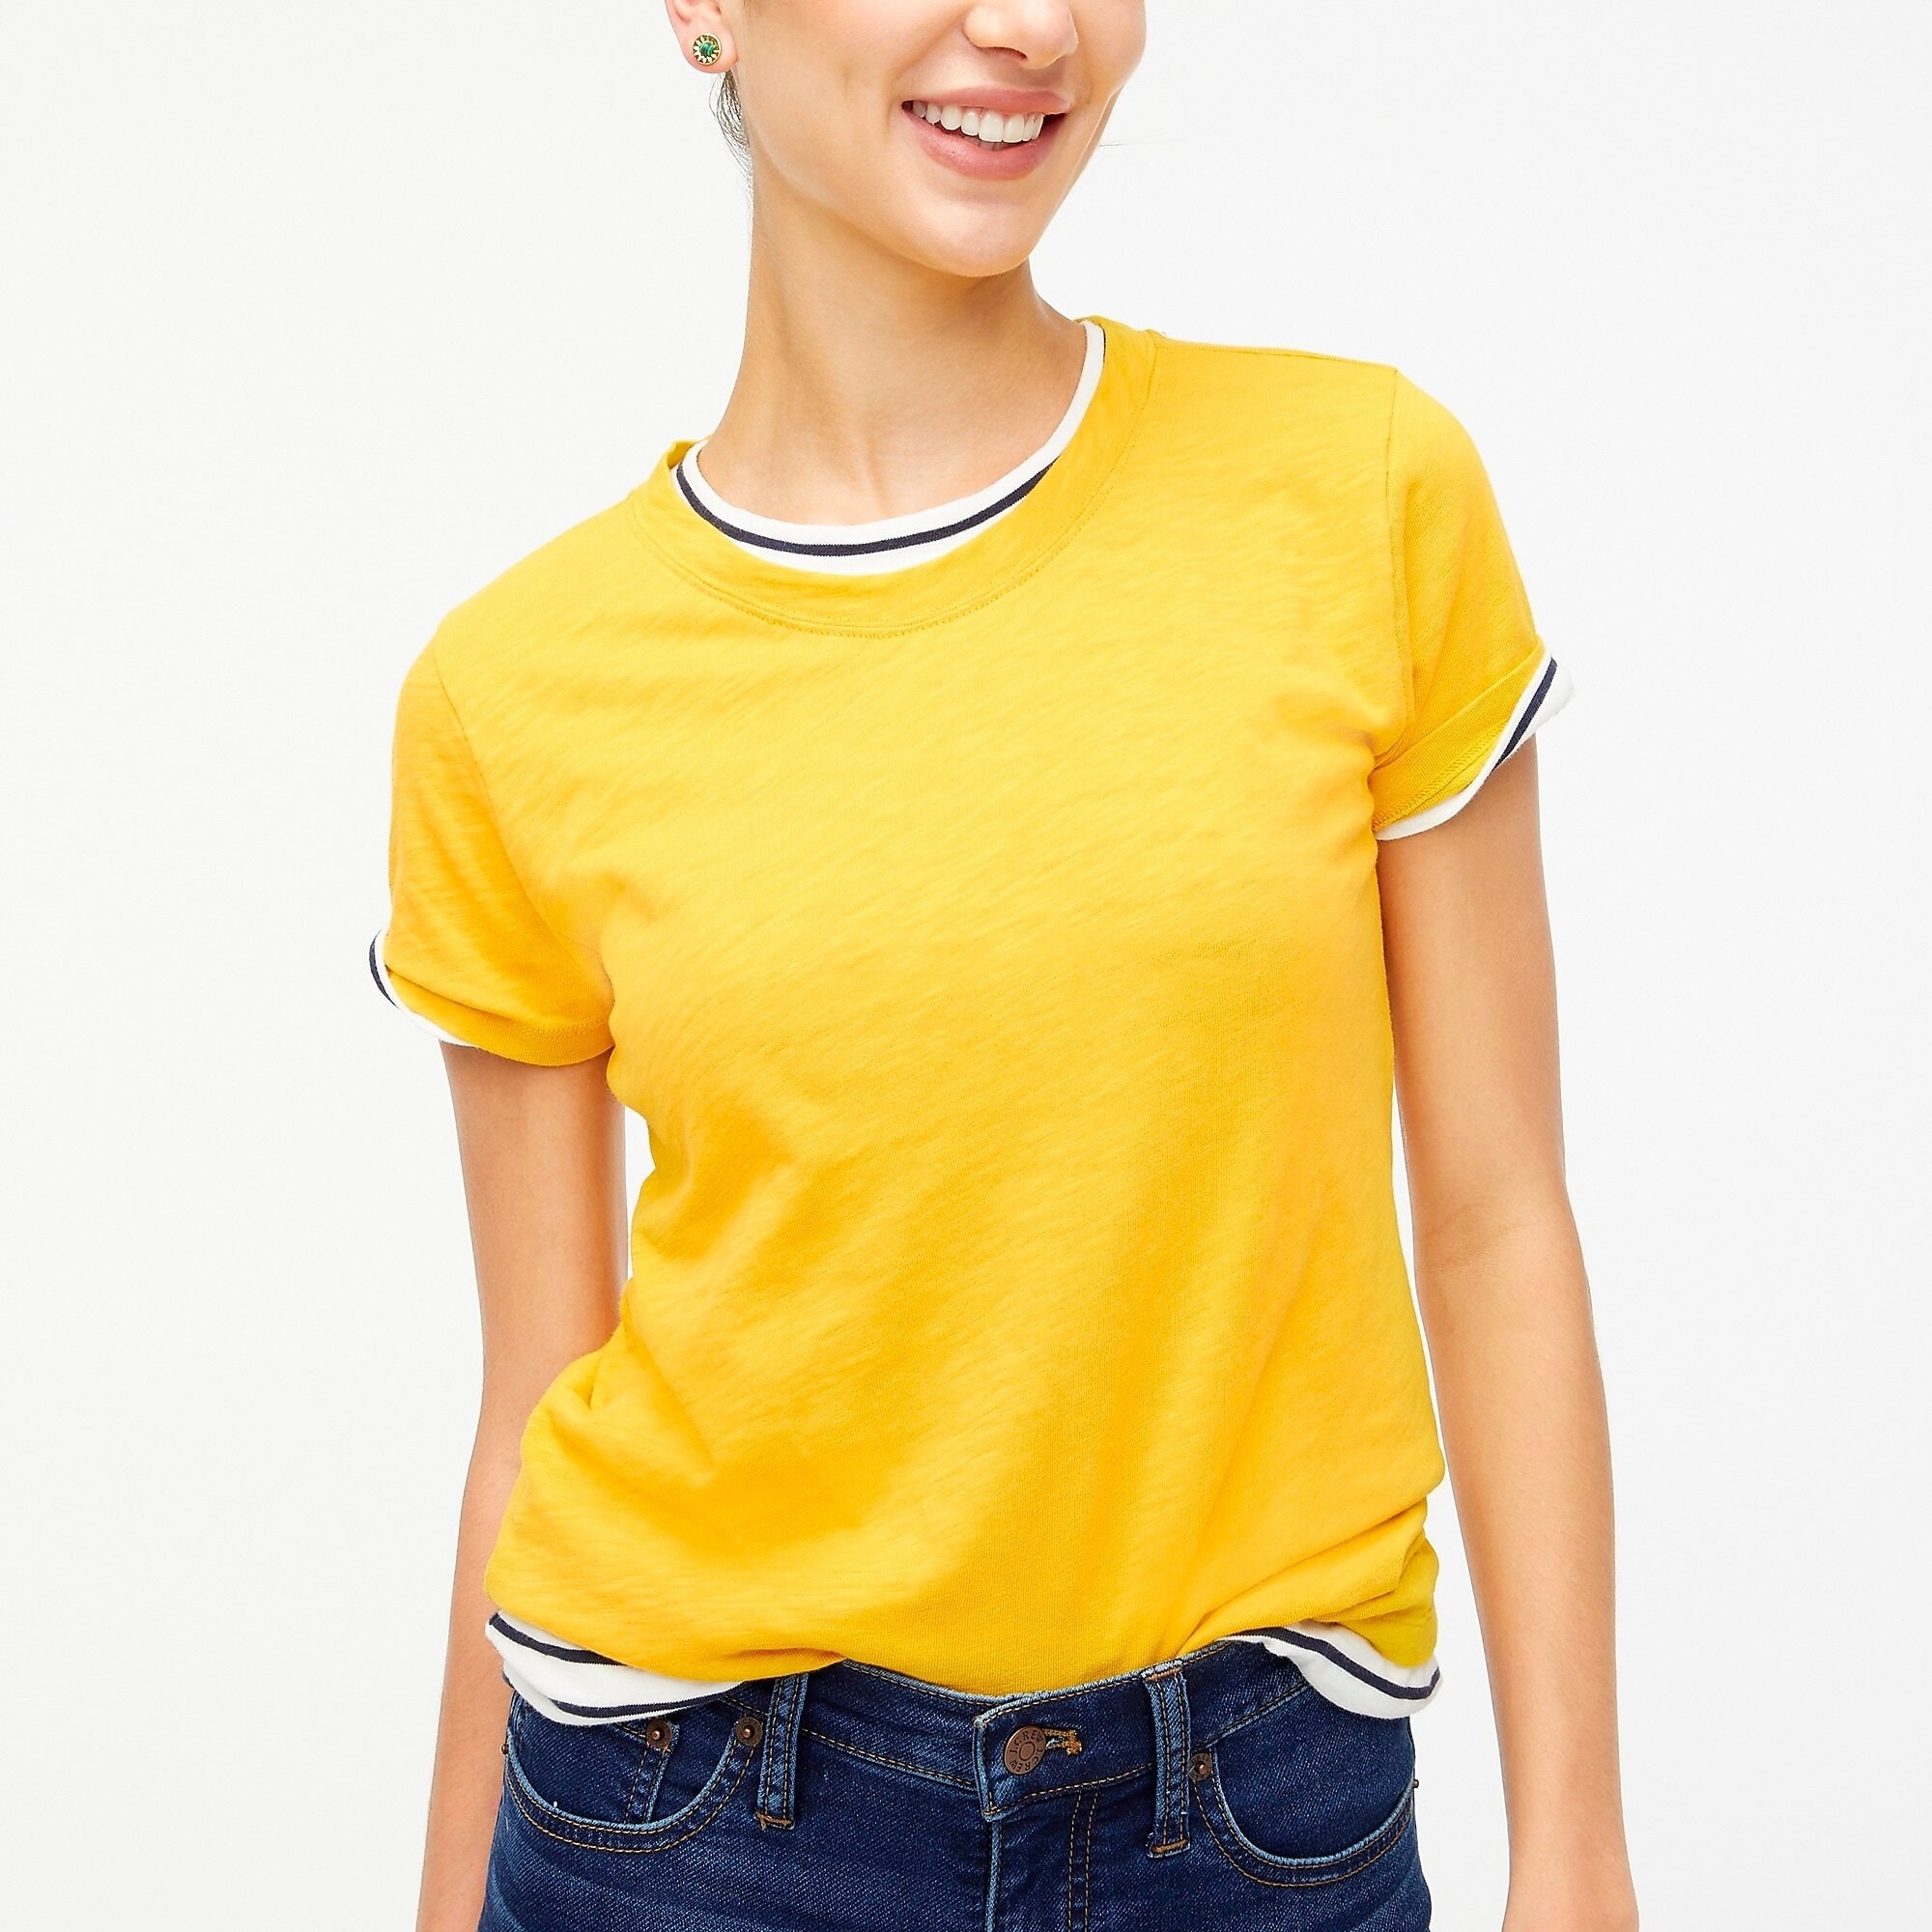 Model wearing the Oxford gold girlfriend crewneck shirt